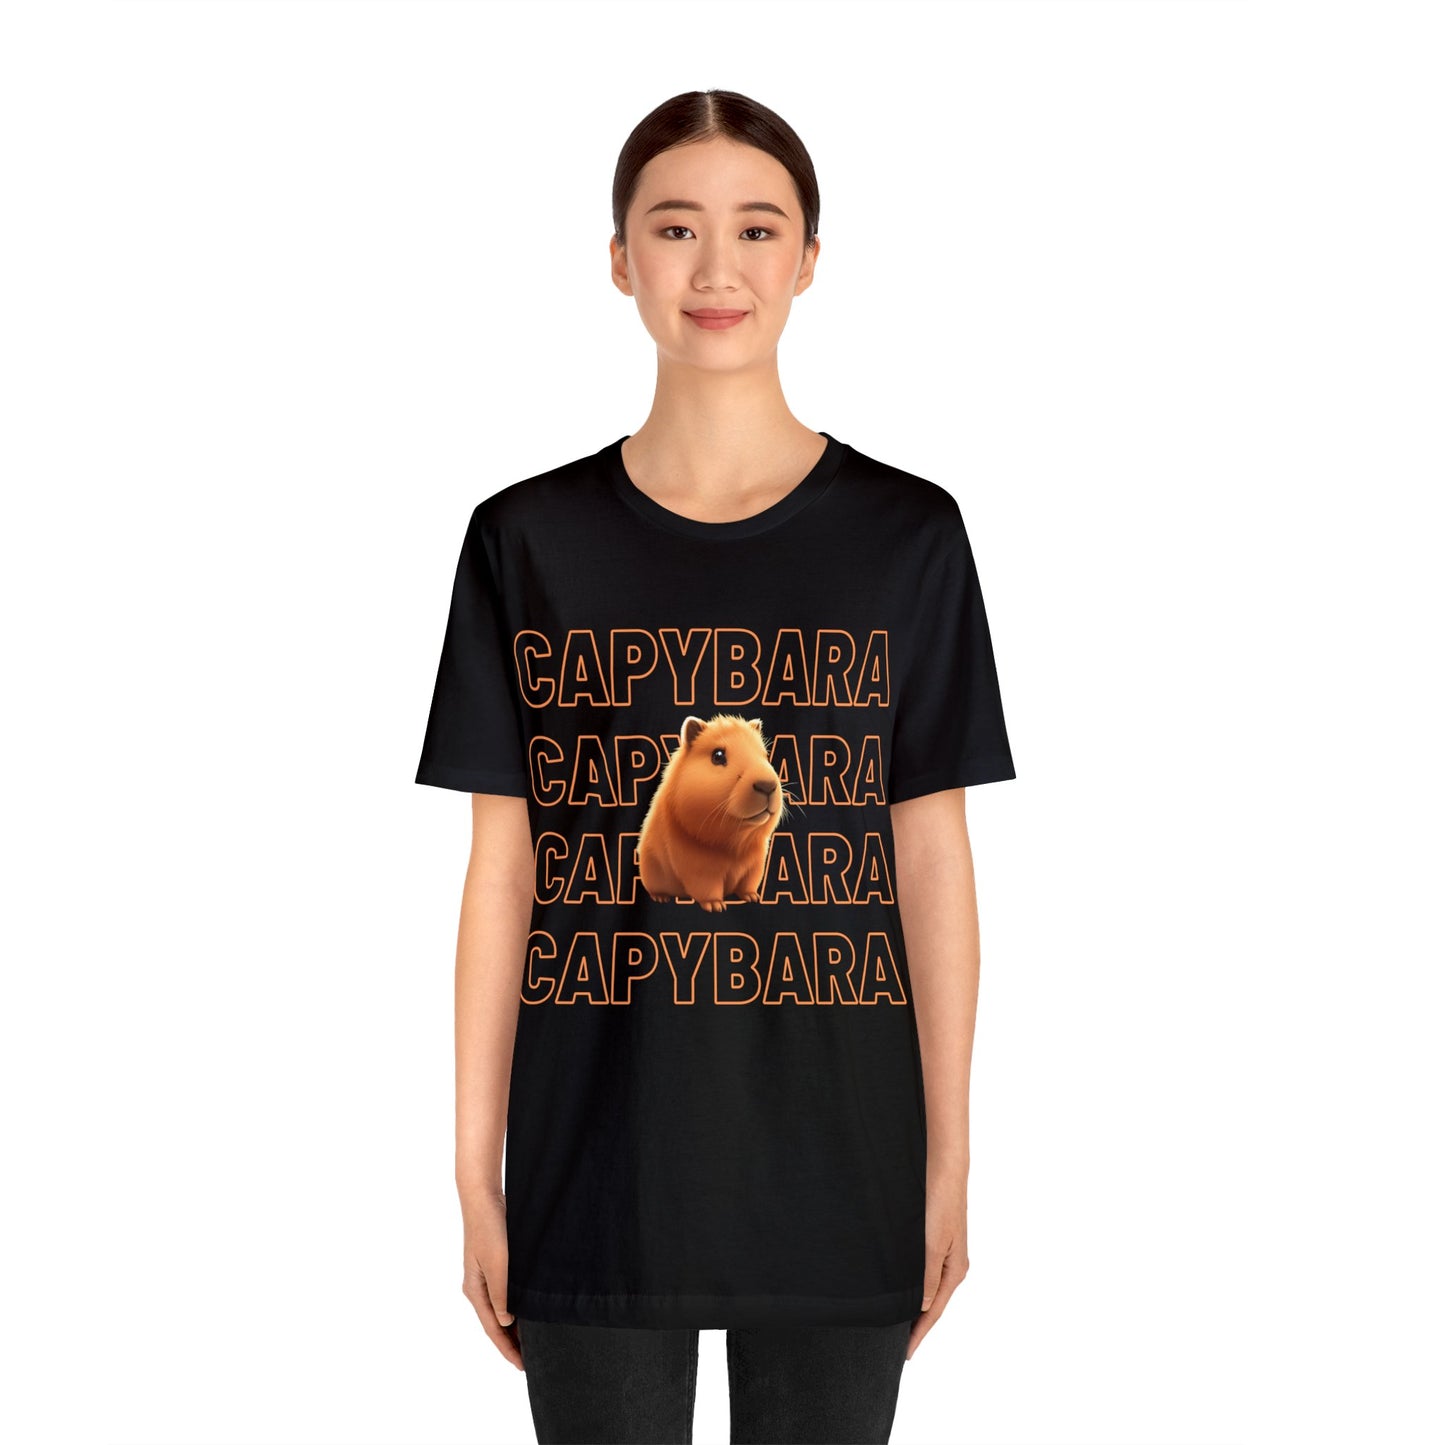 Capybara | Tik Tok | Animal Print | Cute | South America | Wildlife | Nature Lover's Gift | Unisex | Men's | Women's | Tee | T-Shirt